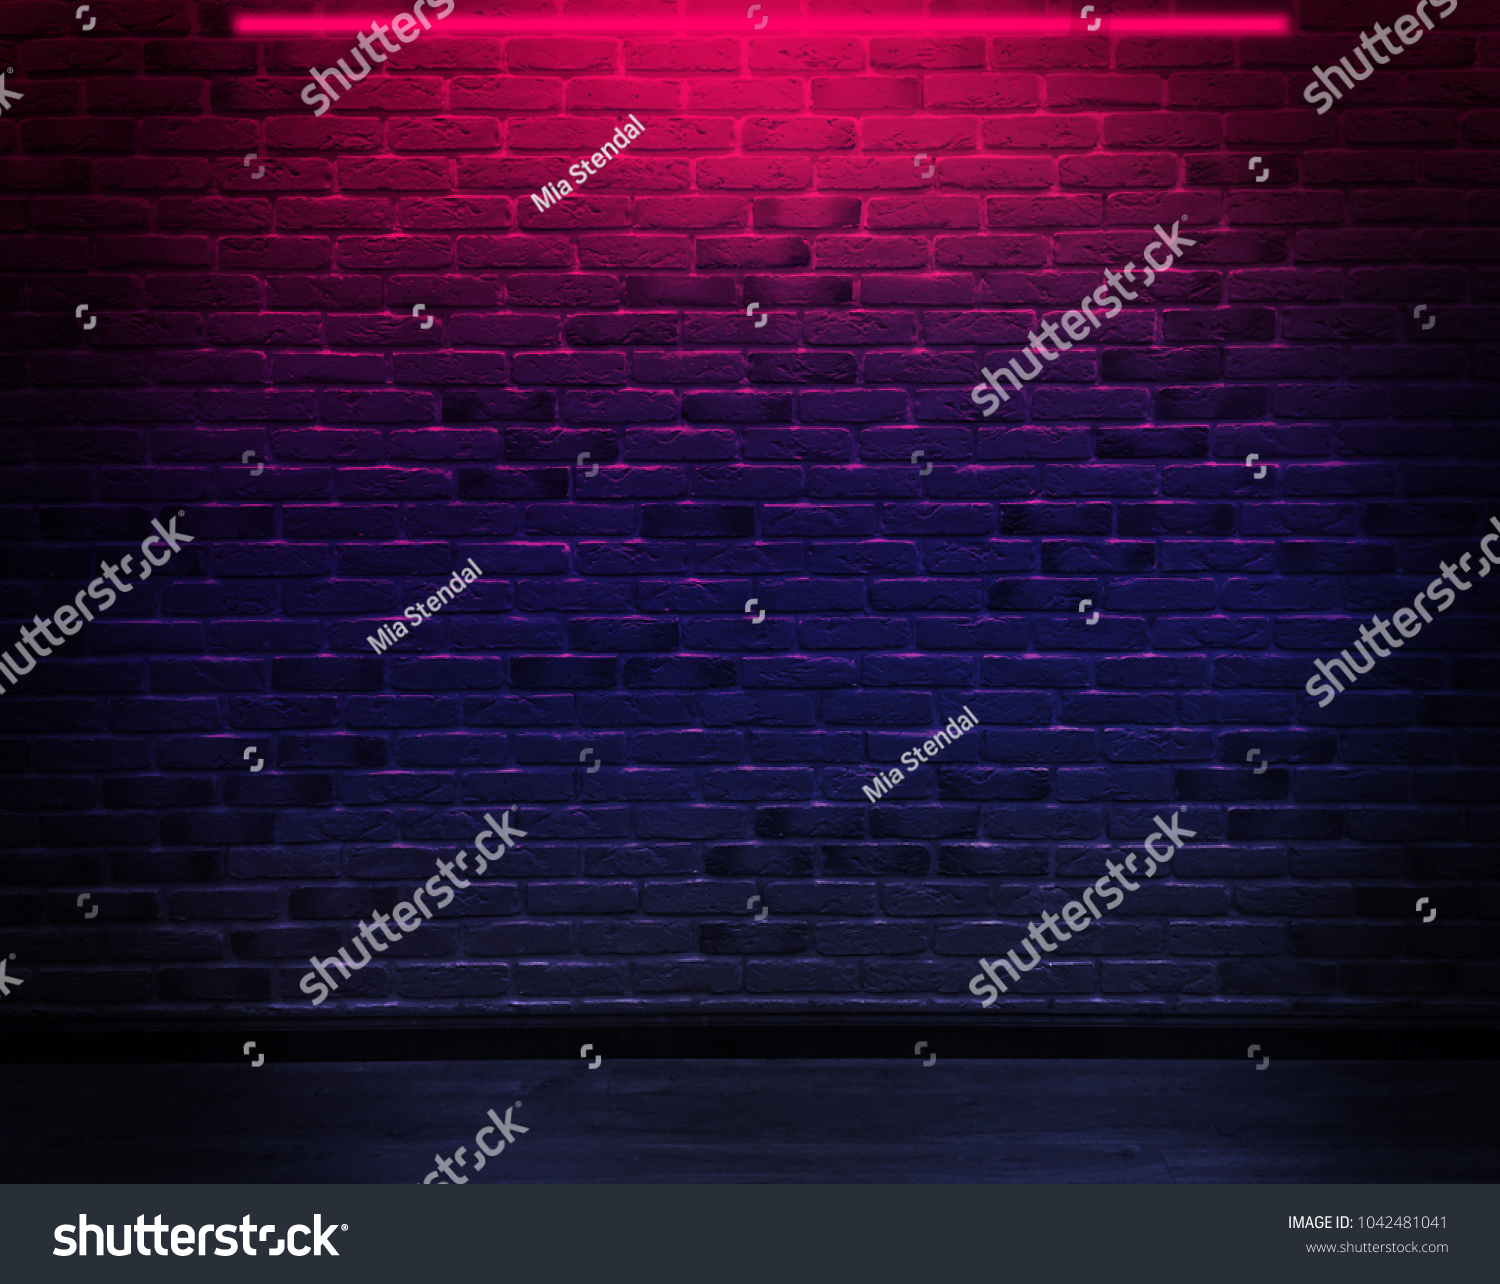 Brick wall, background, neon light #1042481041